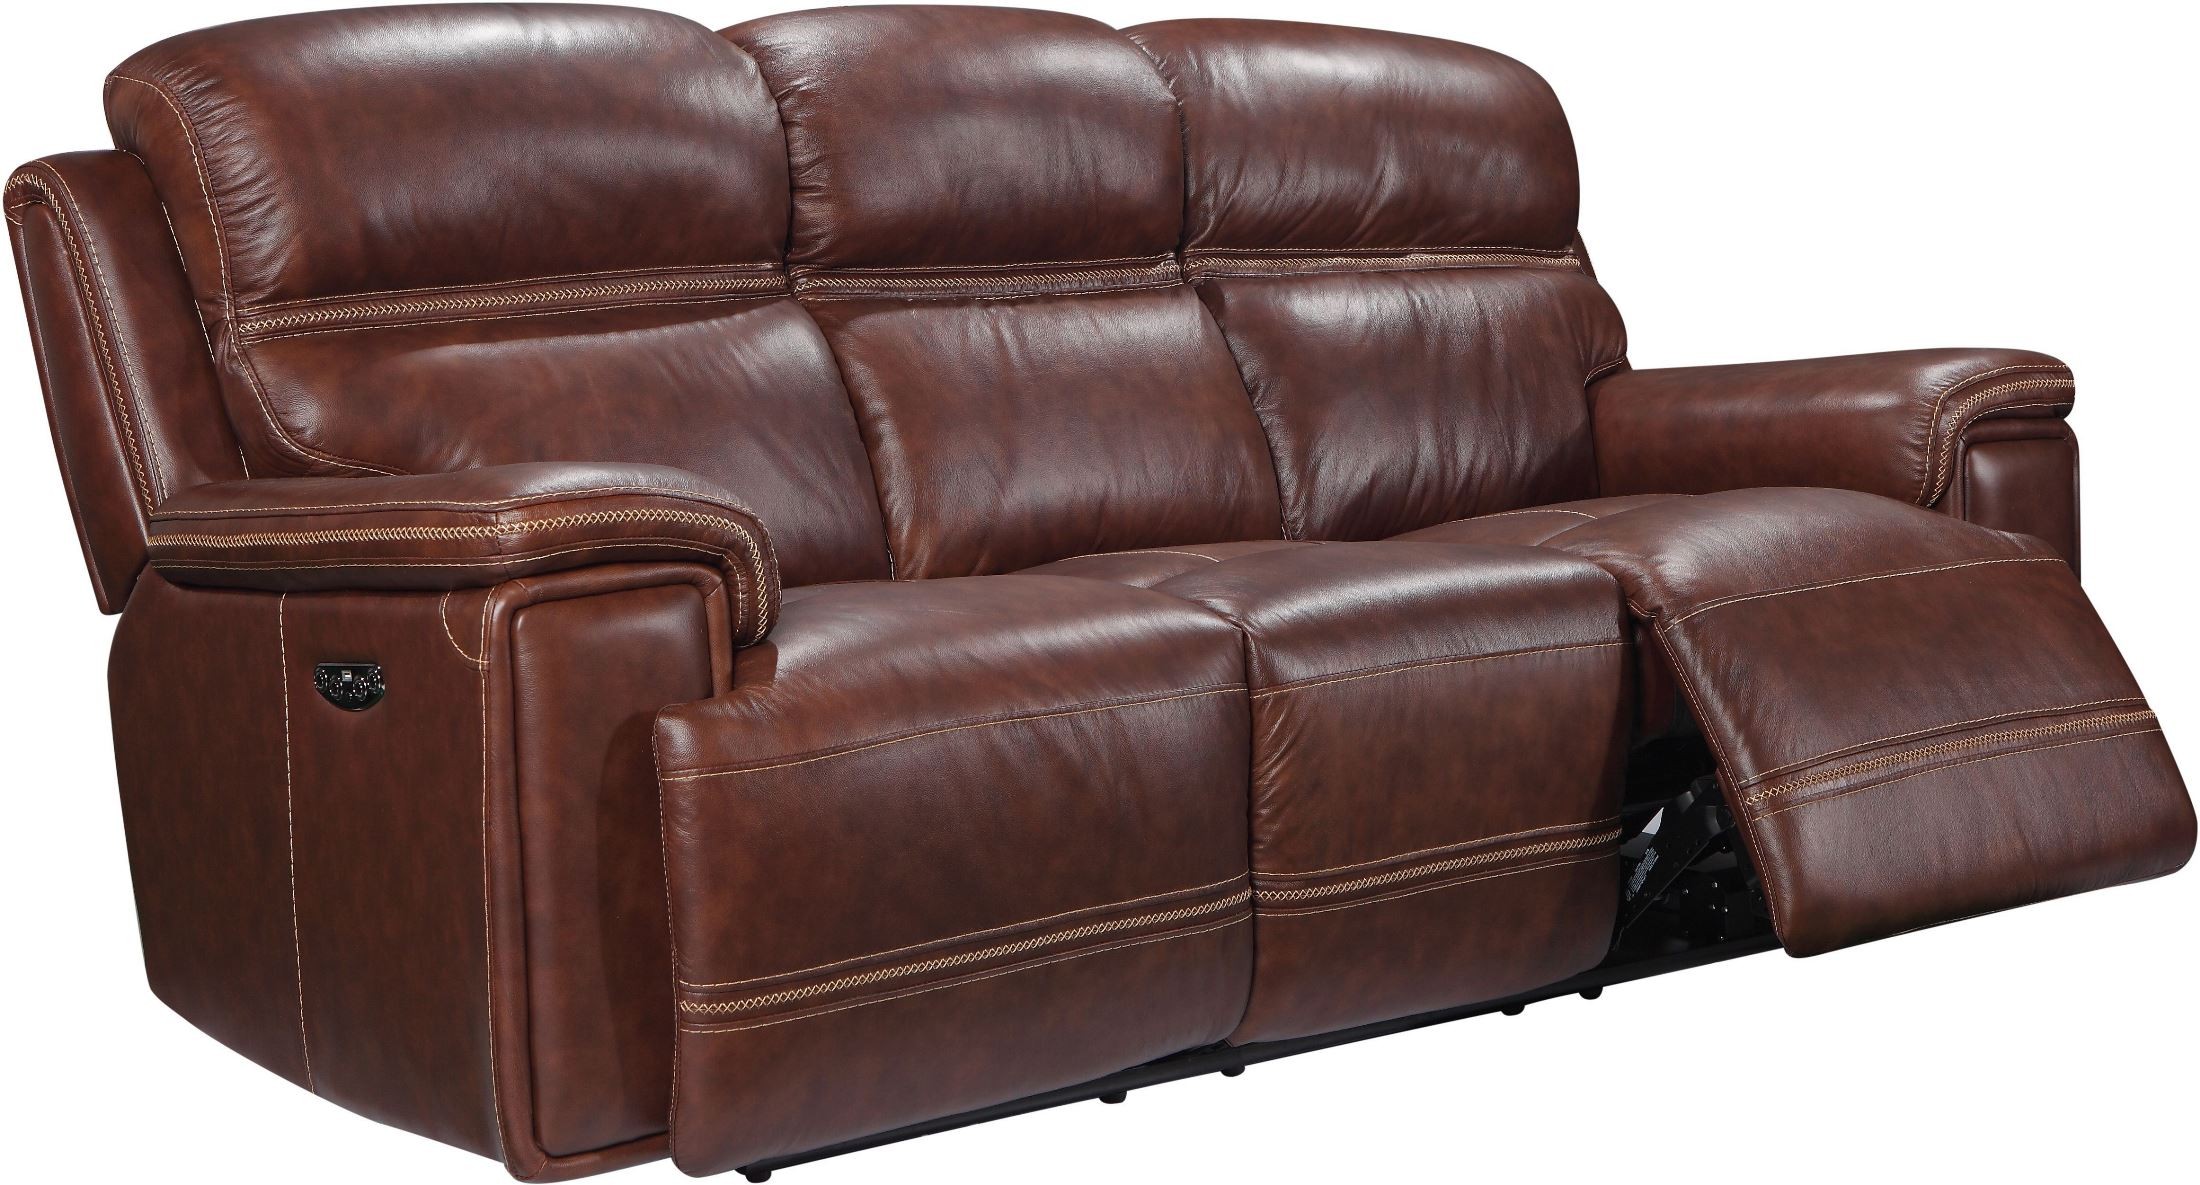 crosby brown leather reclining sofa amazon